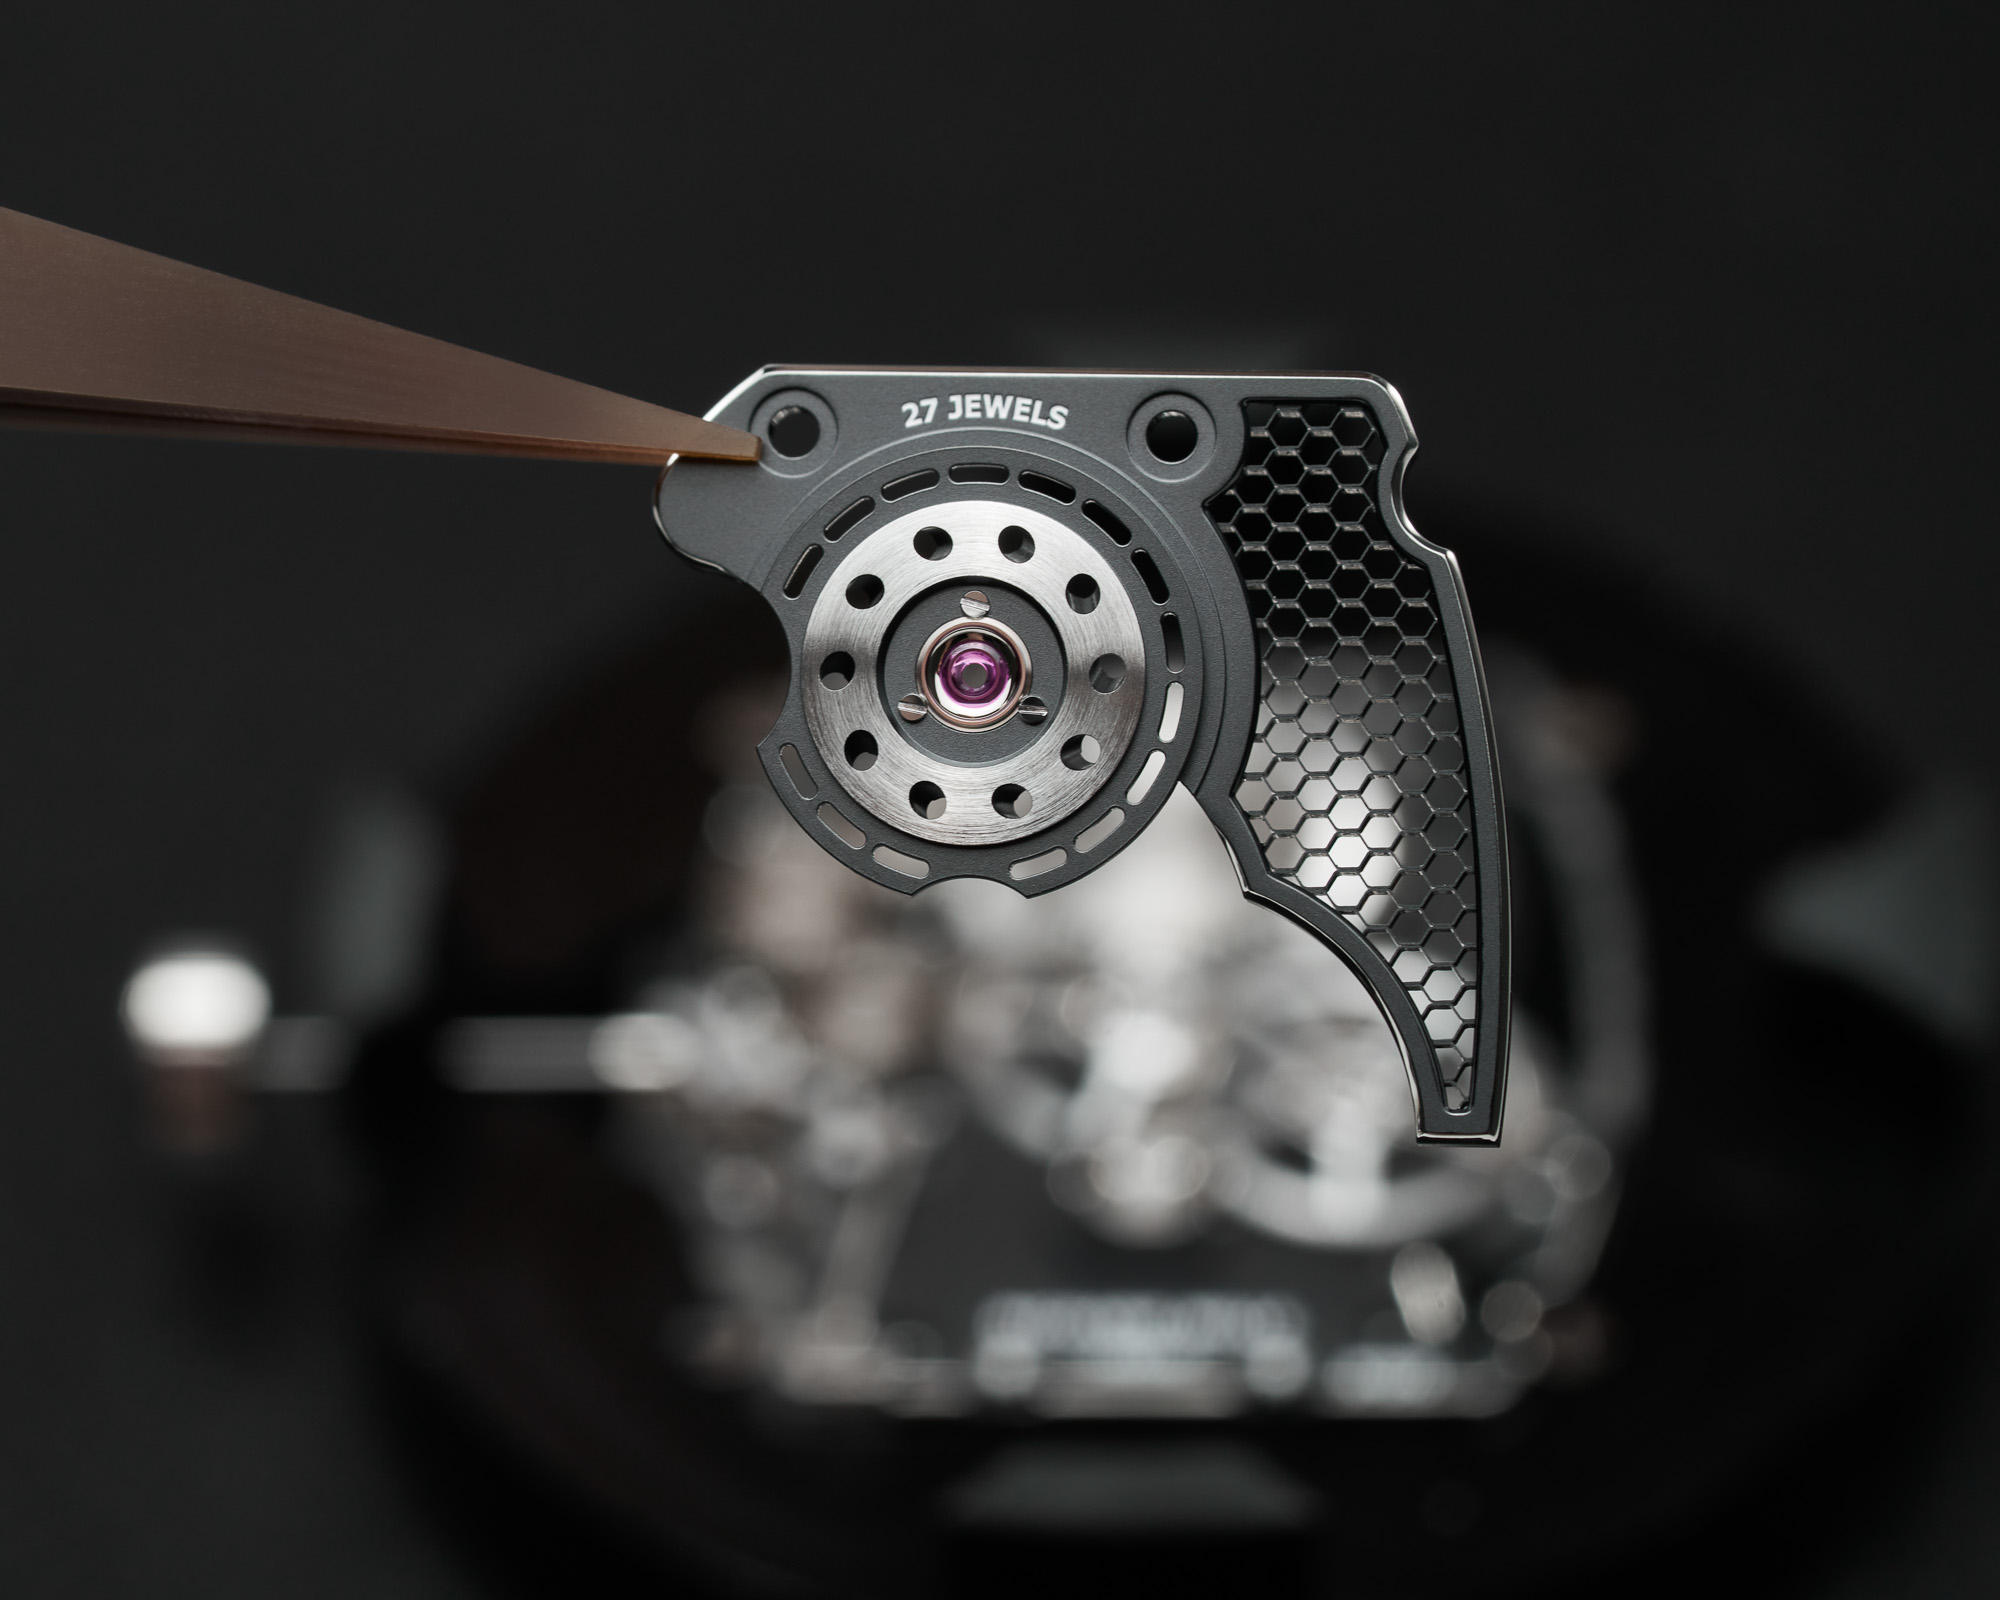 Узнайте все о новых шикарных часах Richard Mille RM 21-02 Tourbillon Aerodyne